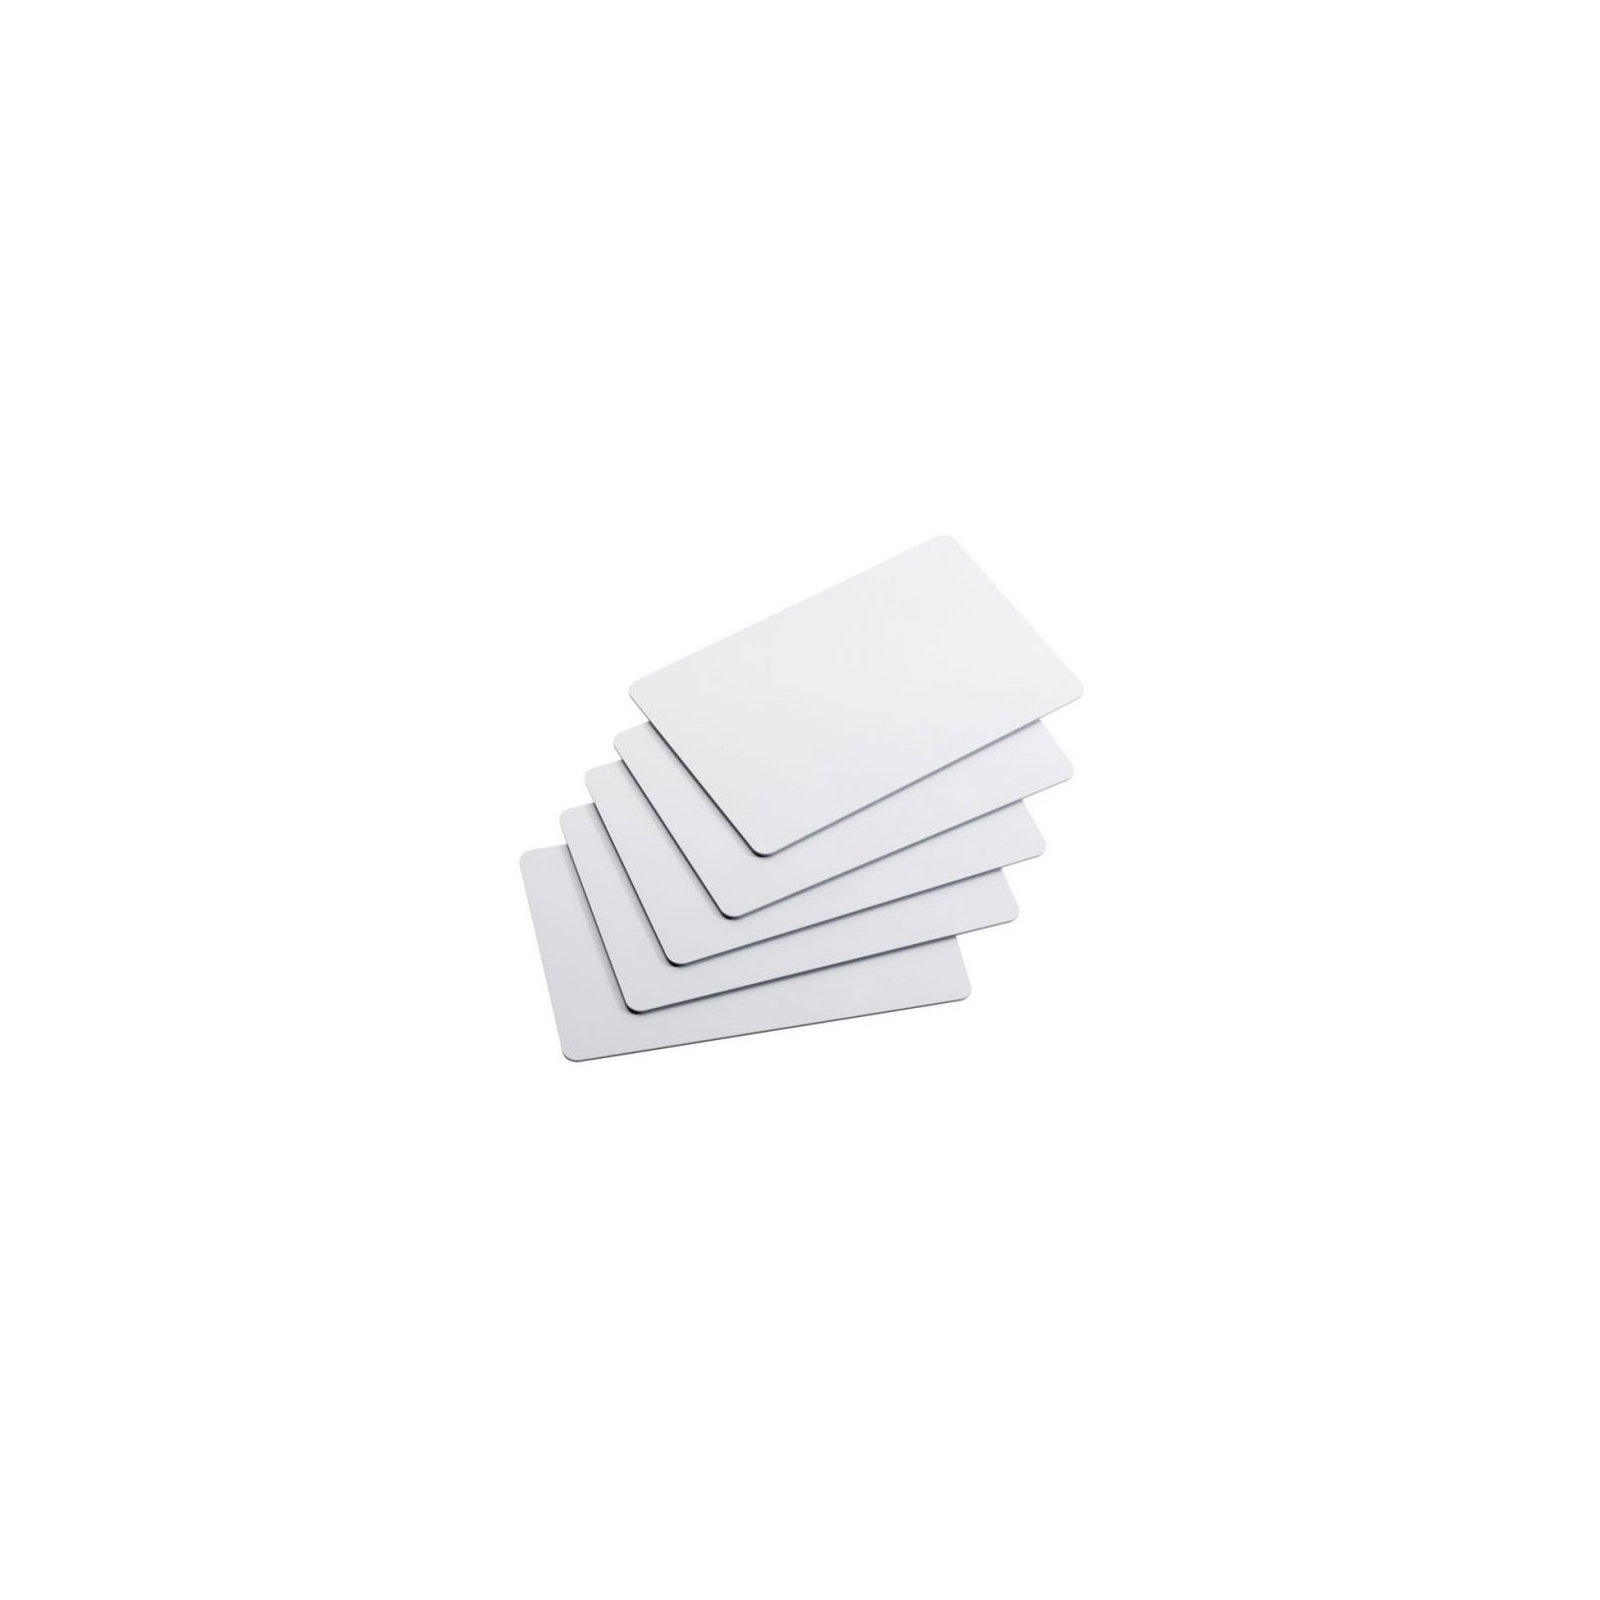 Безконтактна картка EM-Marine 0.8мм white, чип TK4100 (01-001)